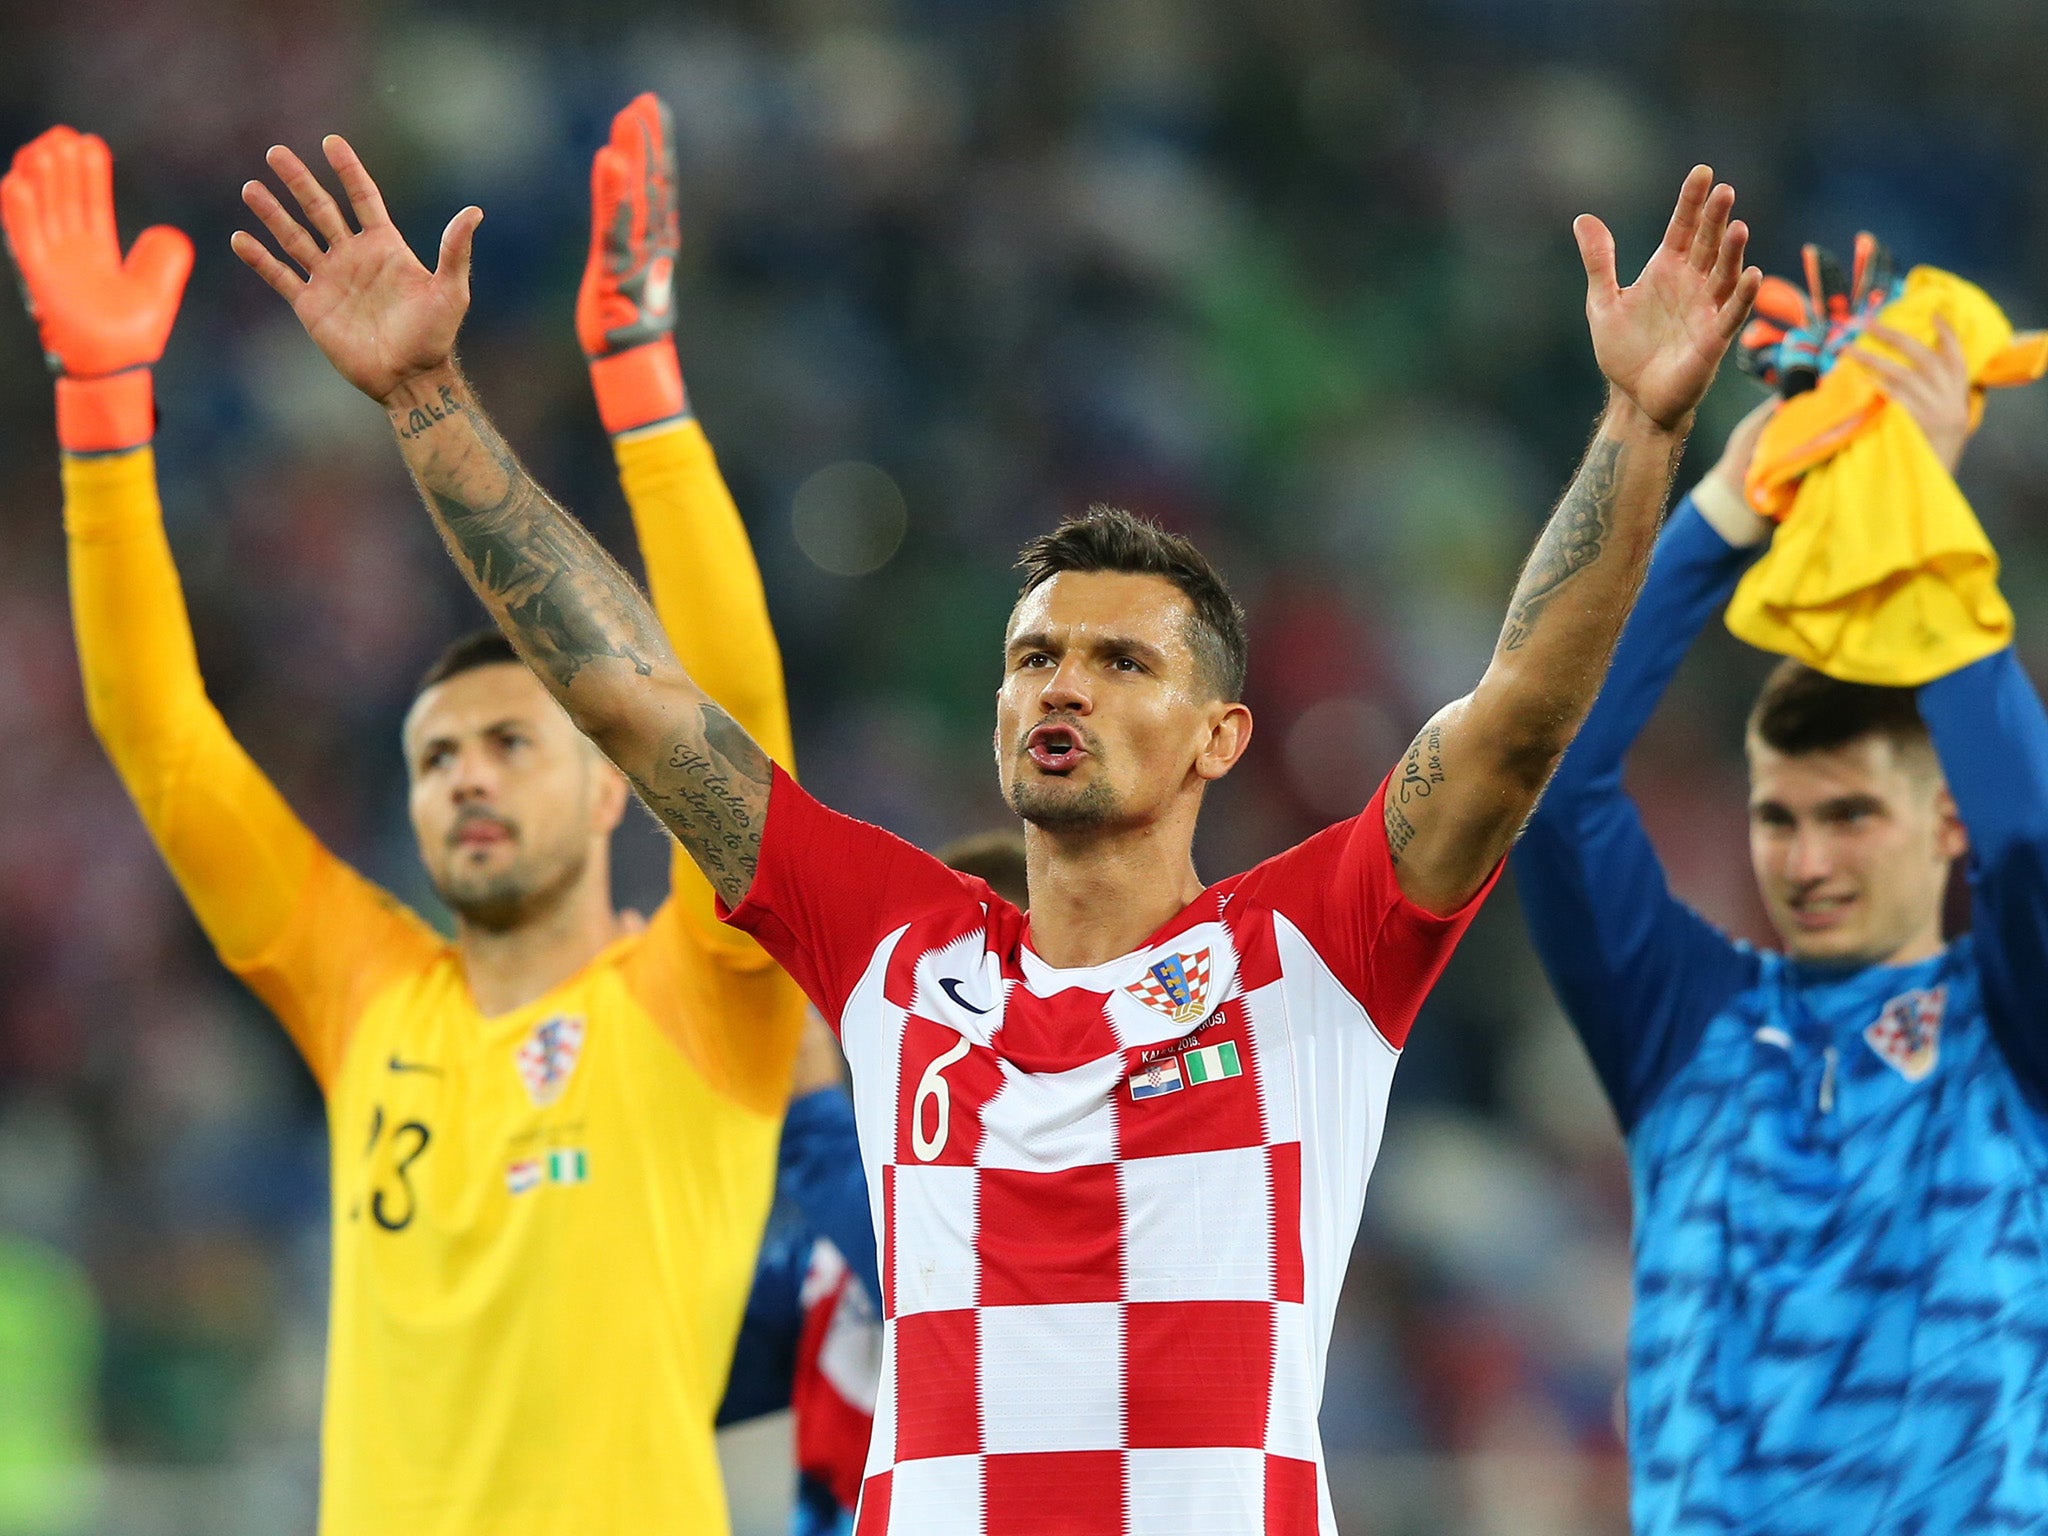 Dejan Lovren of Croatia celebrates with fans following his side's victory over Nigeria